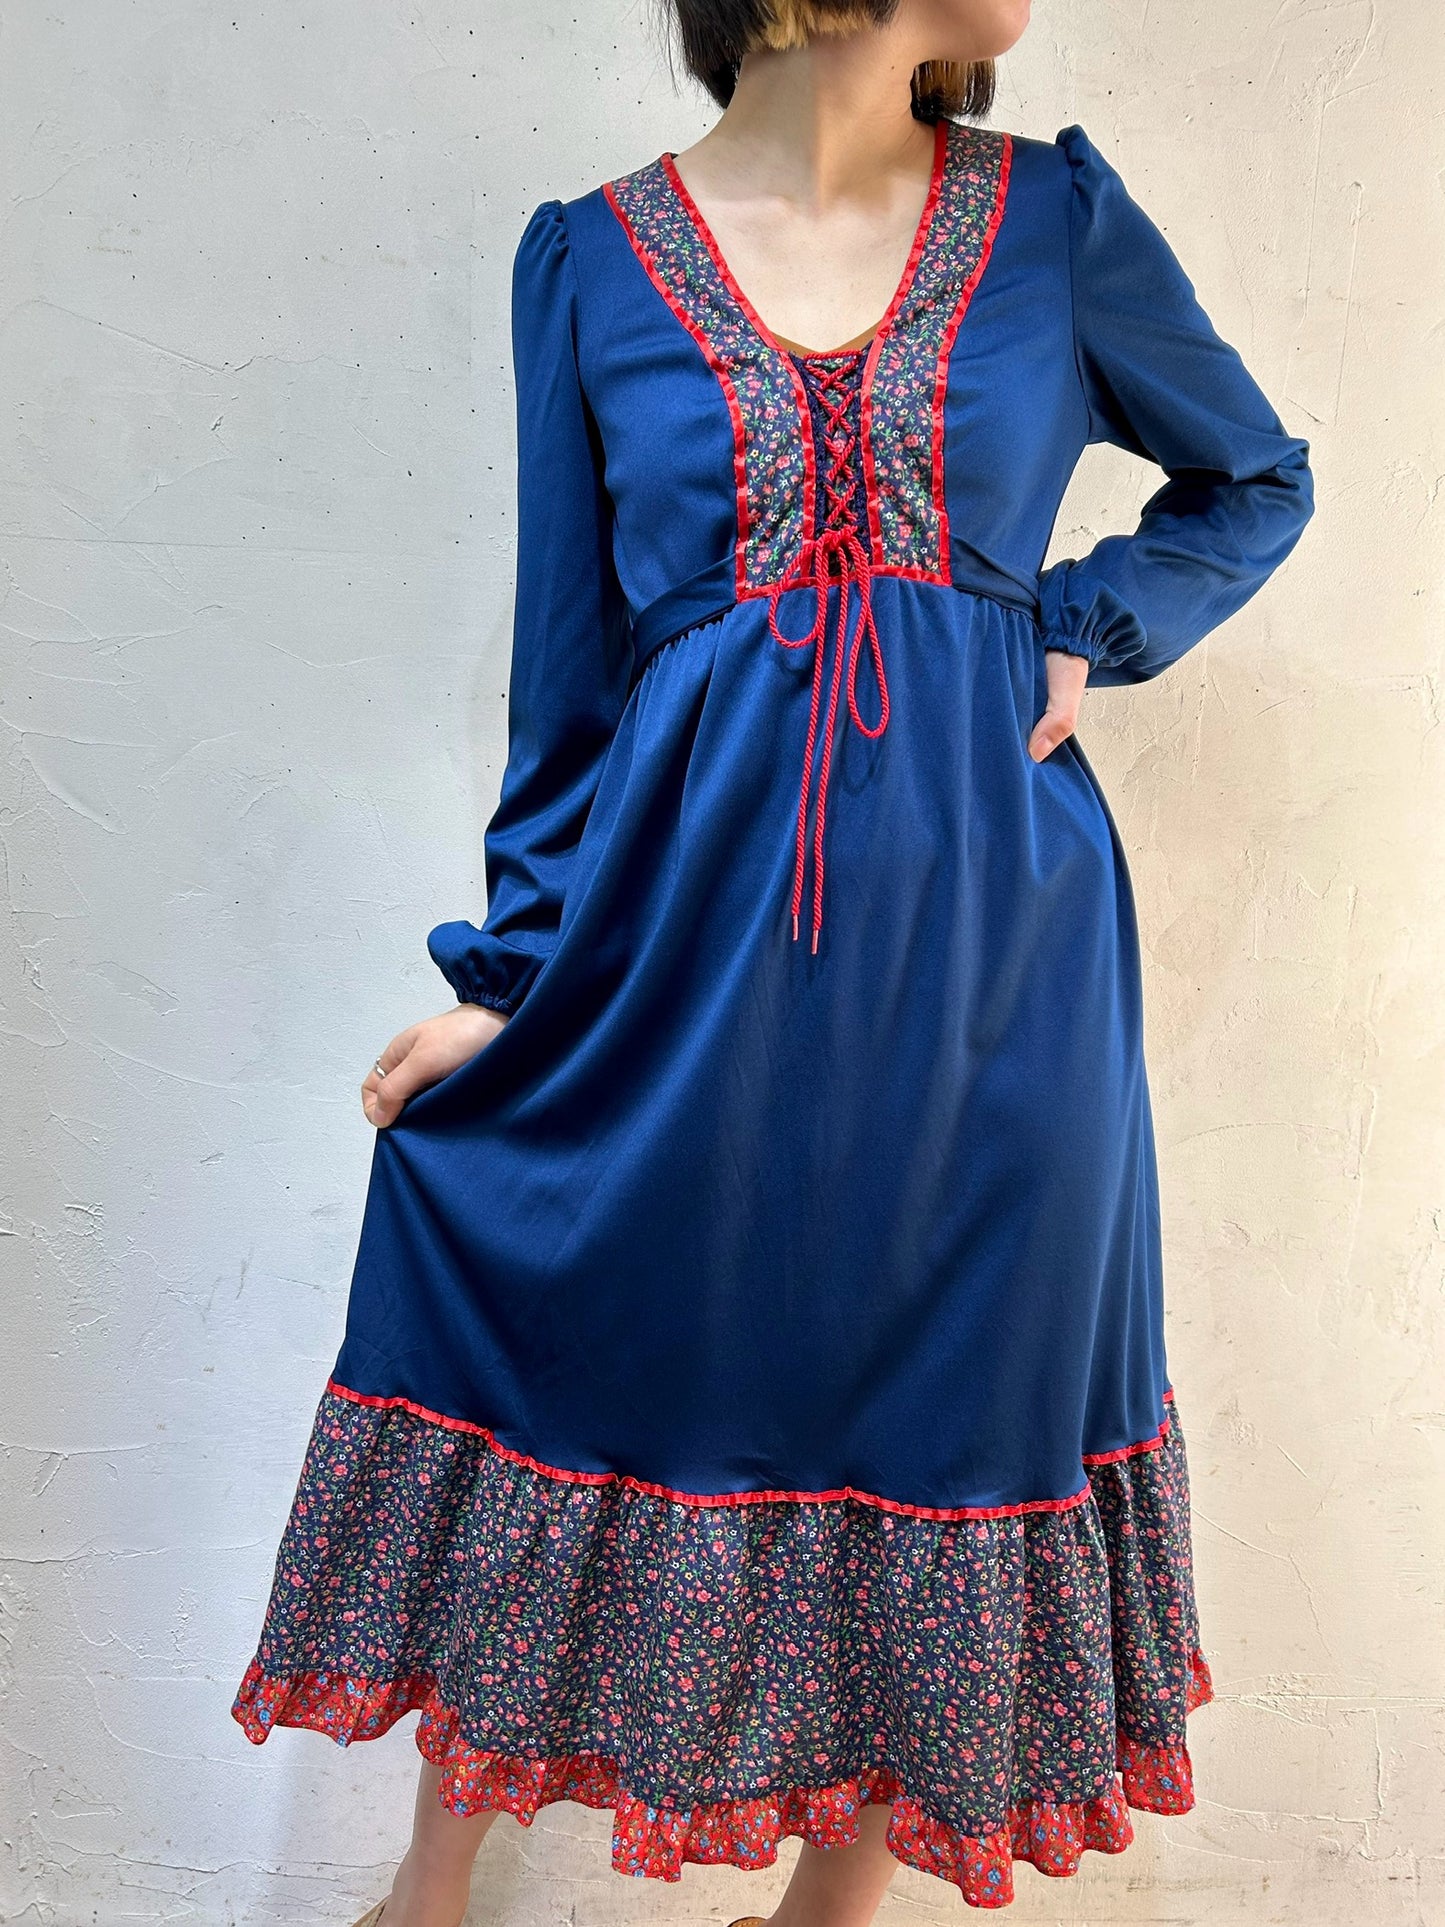 ’70s Vintage Dress [B26219]